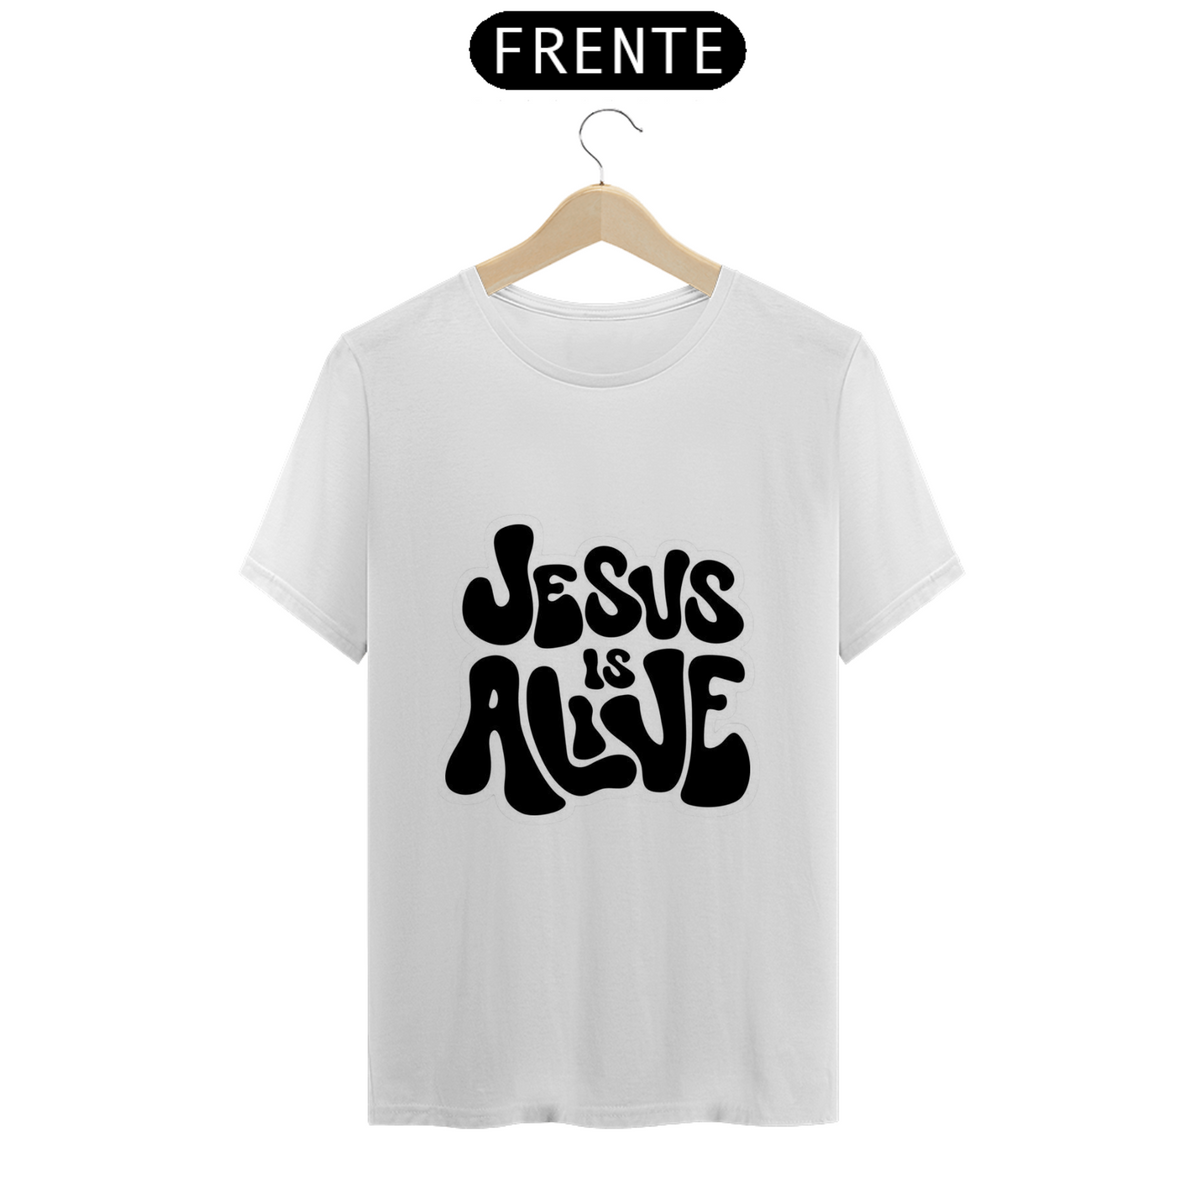 Nome do produto: Jesus is Alive